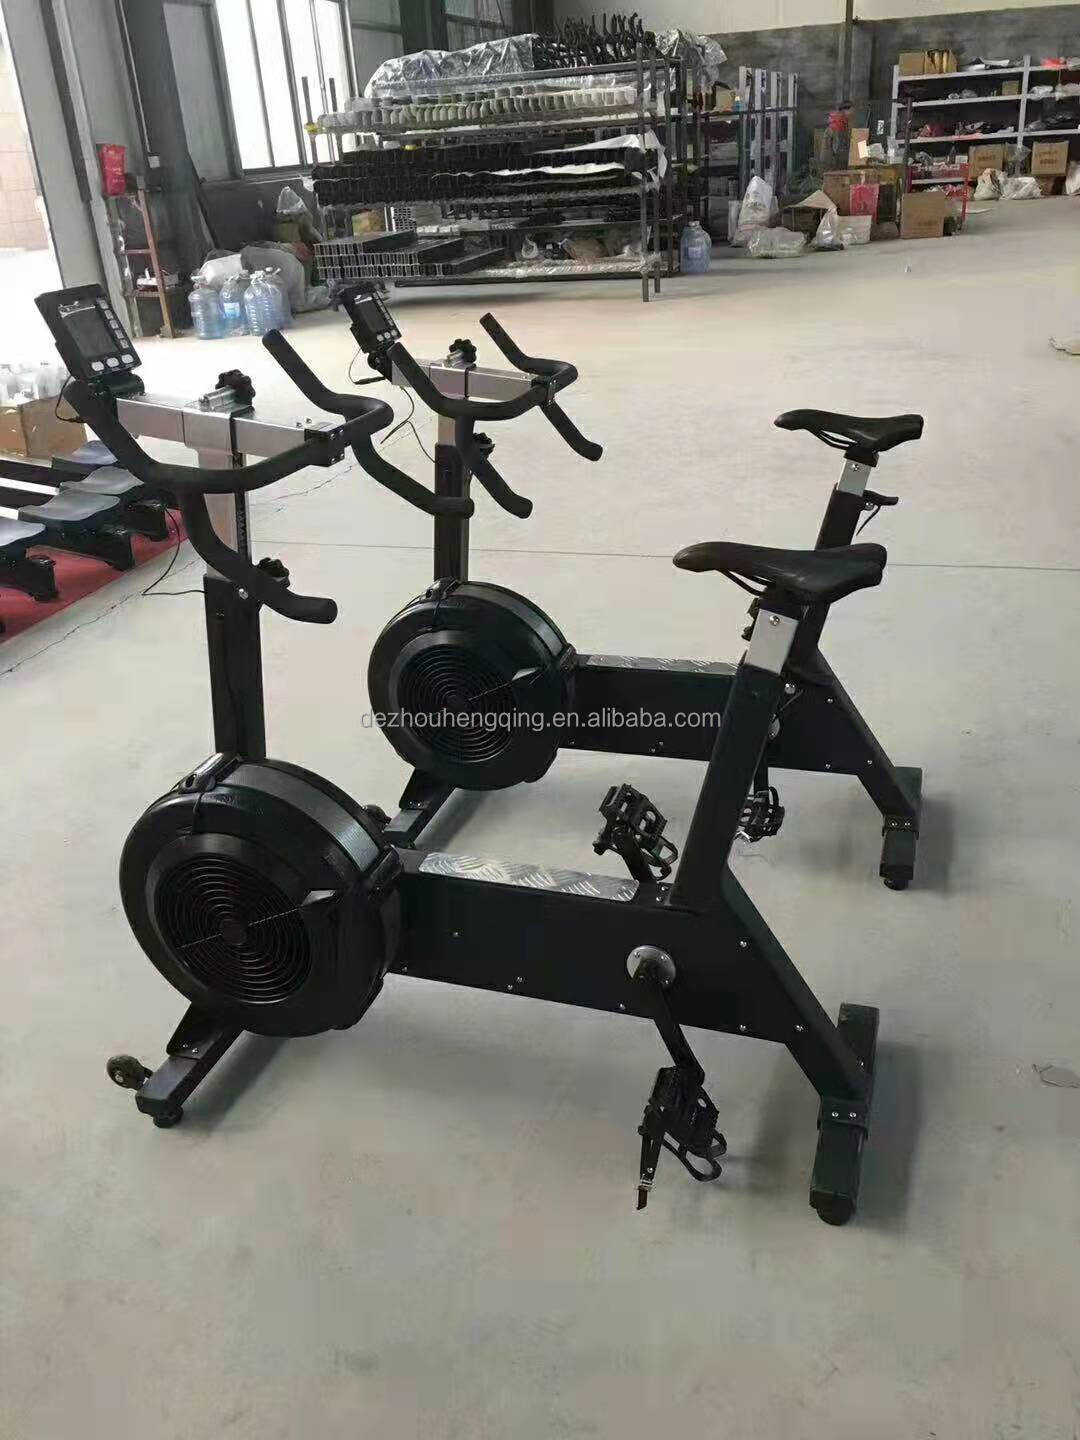 Cardio Workout Machine Cardio Training Exercise Bike Home Fitness Equipment